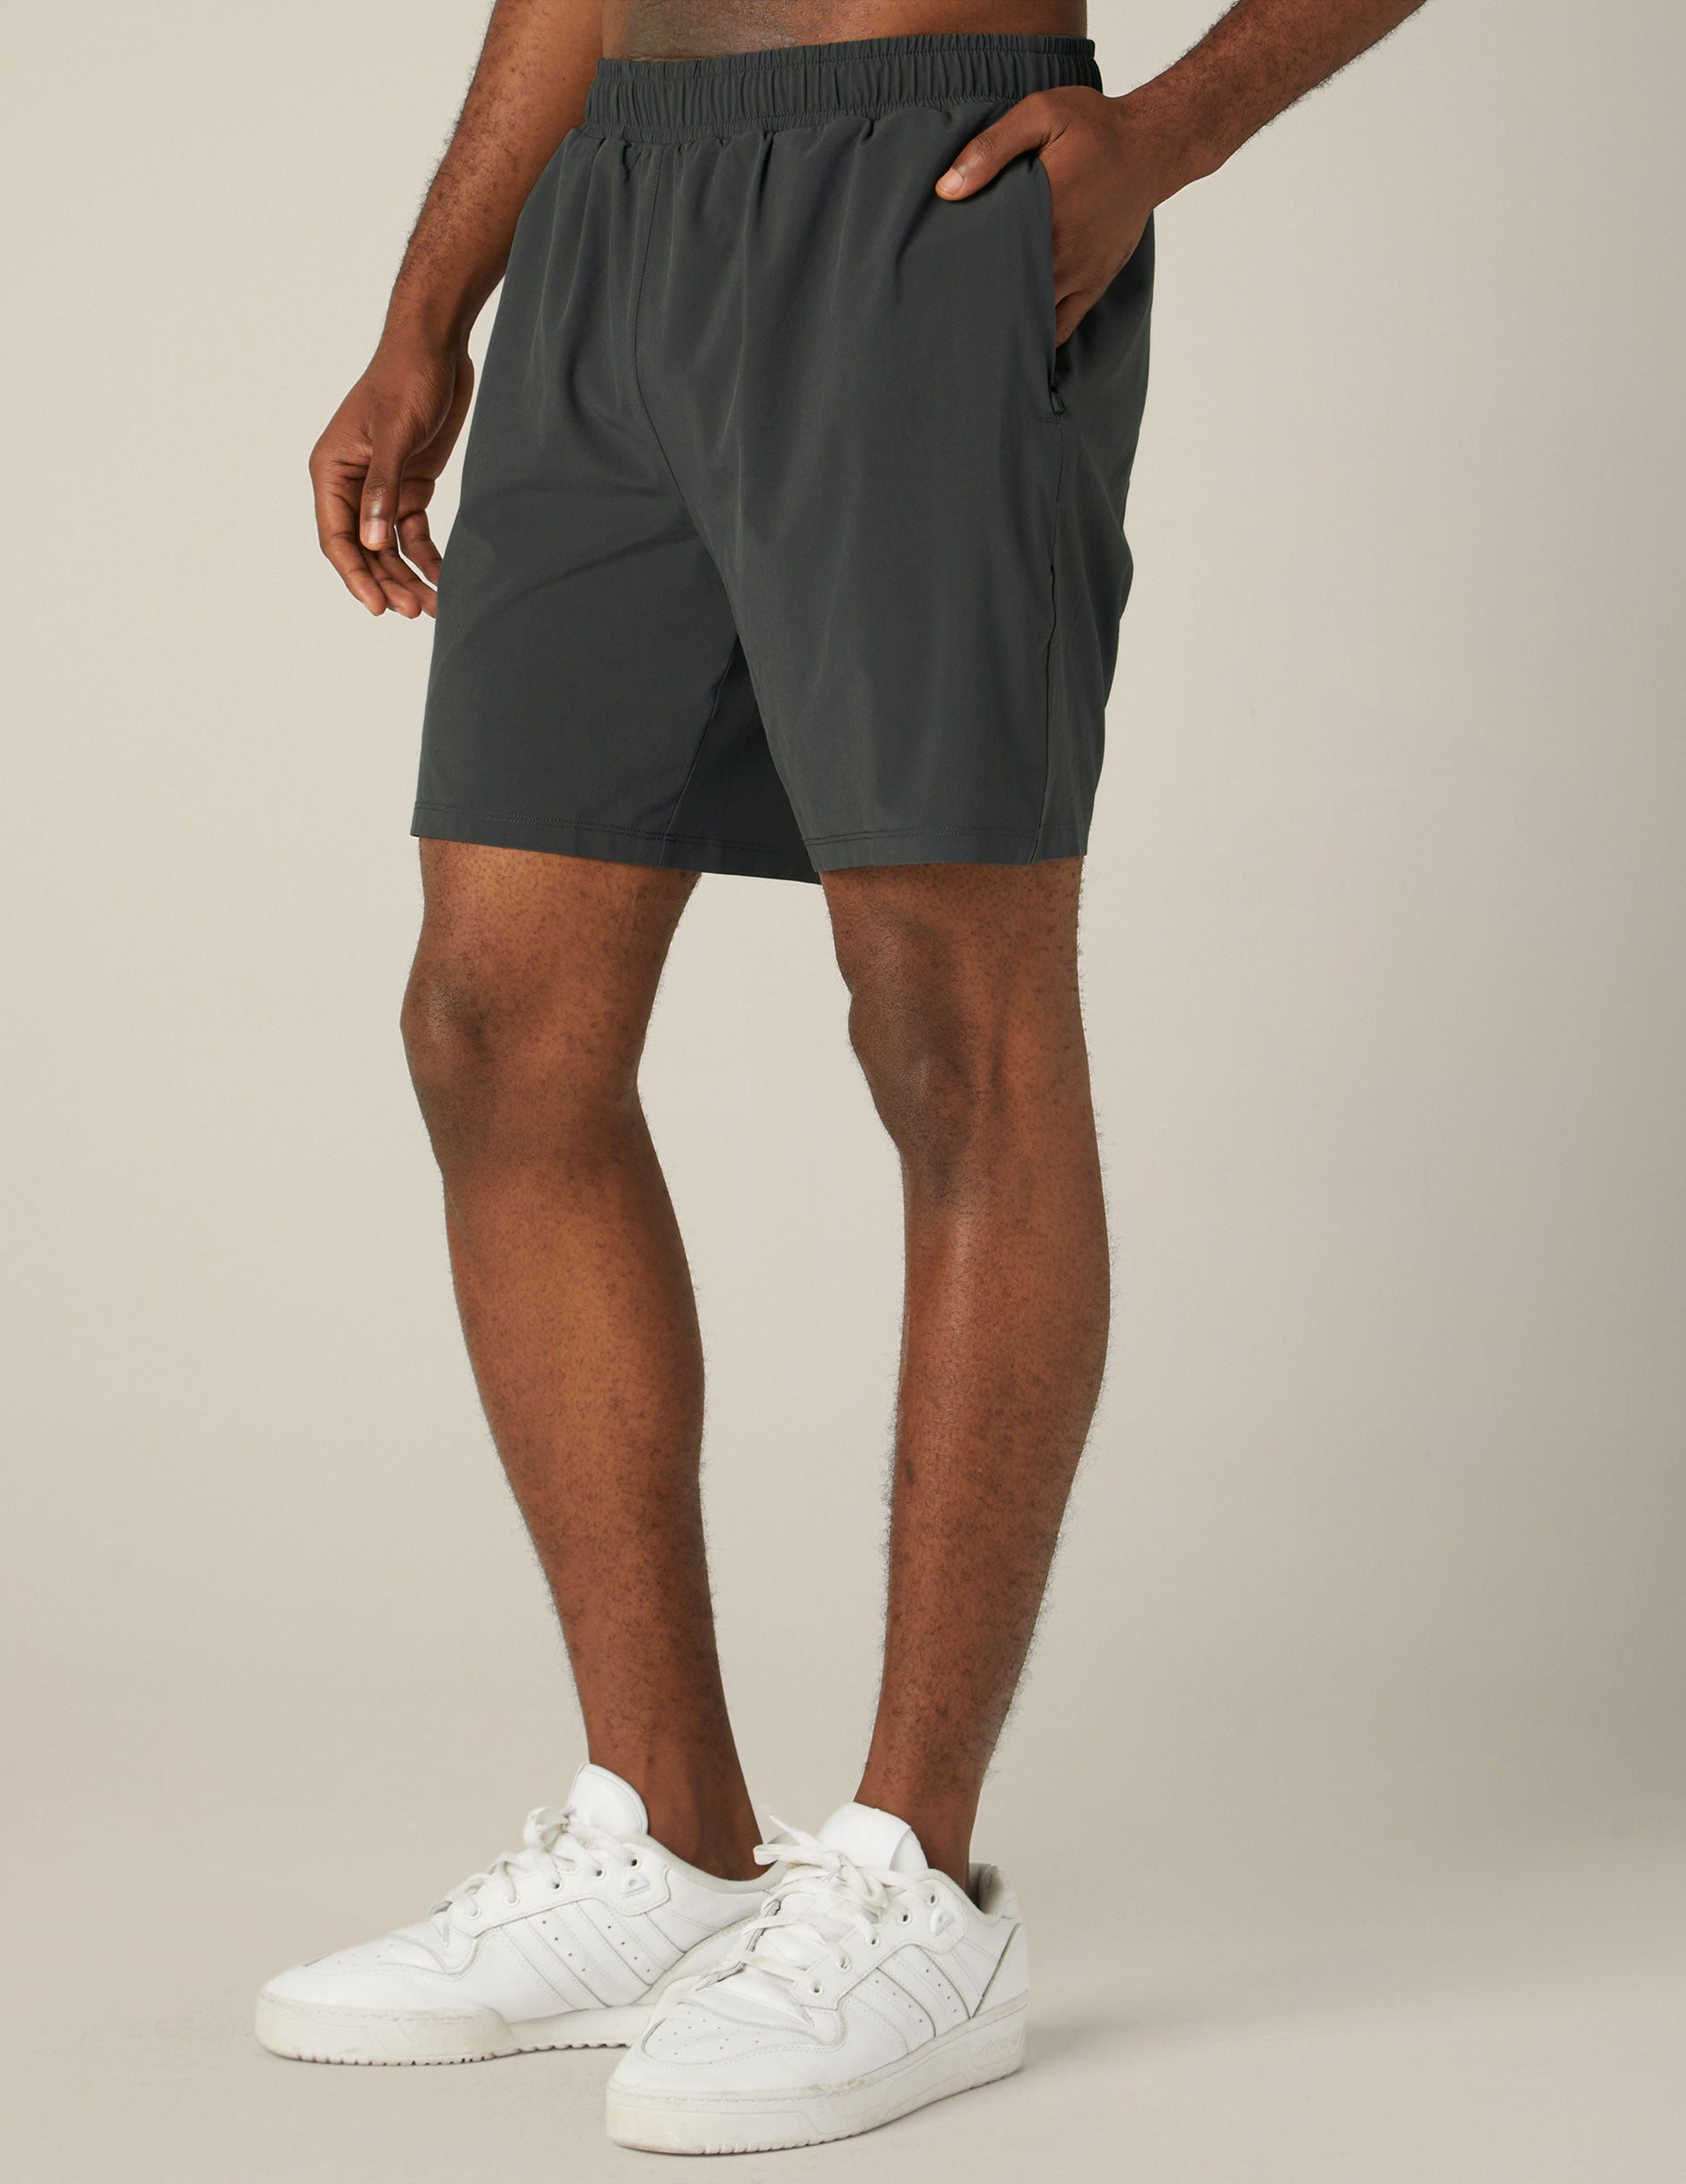 dark gray mens shorts